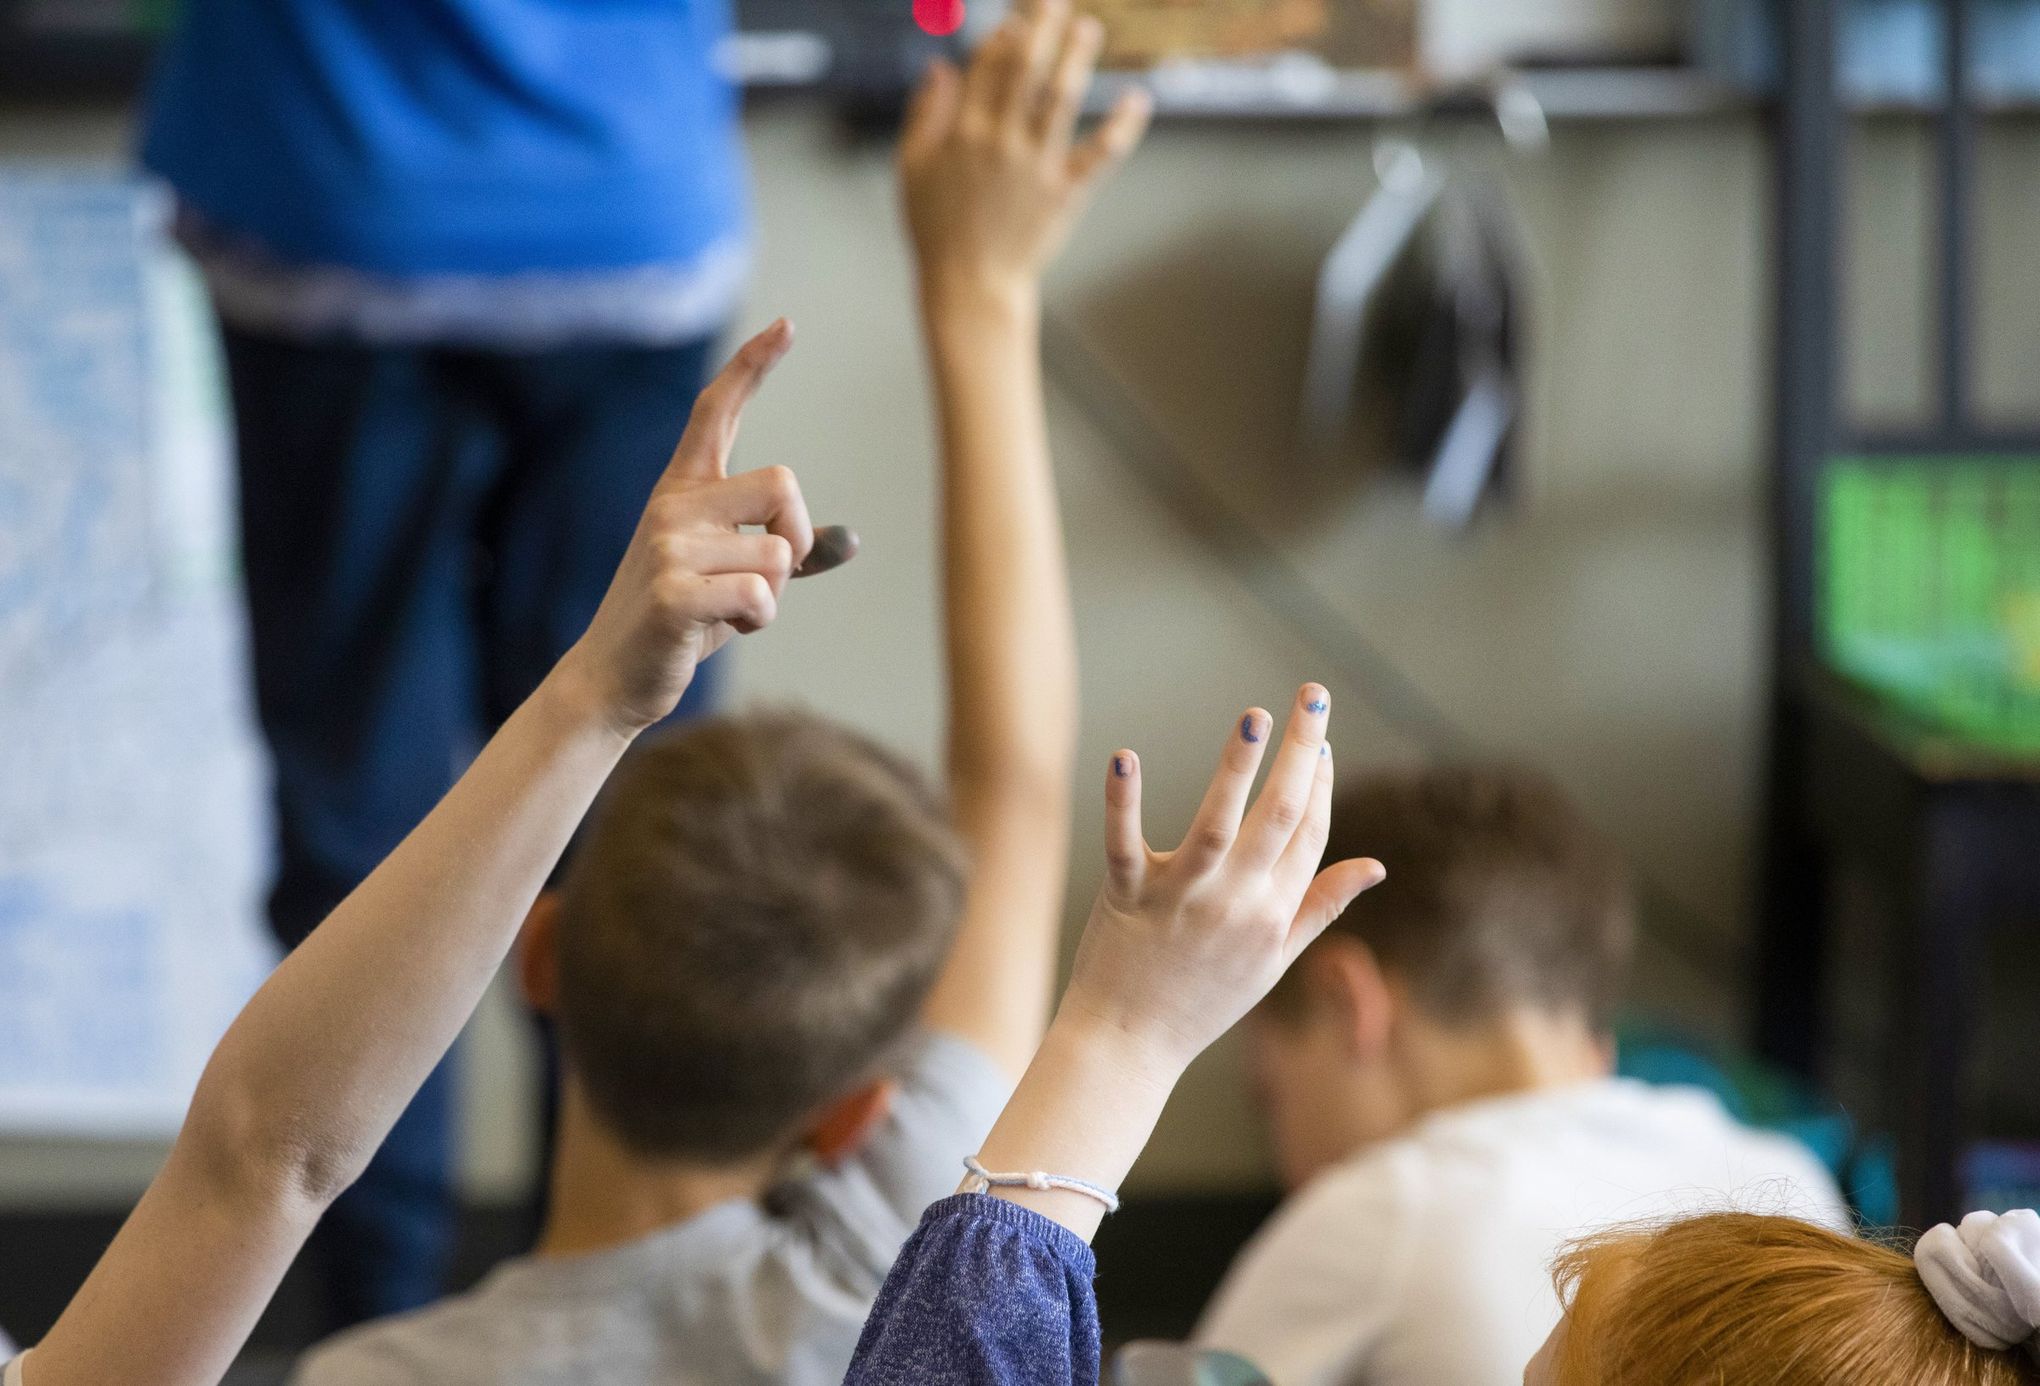 Students raise hands during class at Woodridge Elementary School in Bellevue.